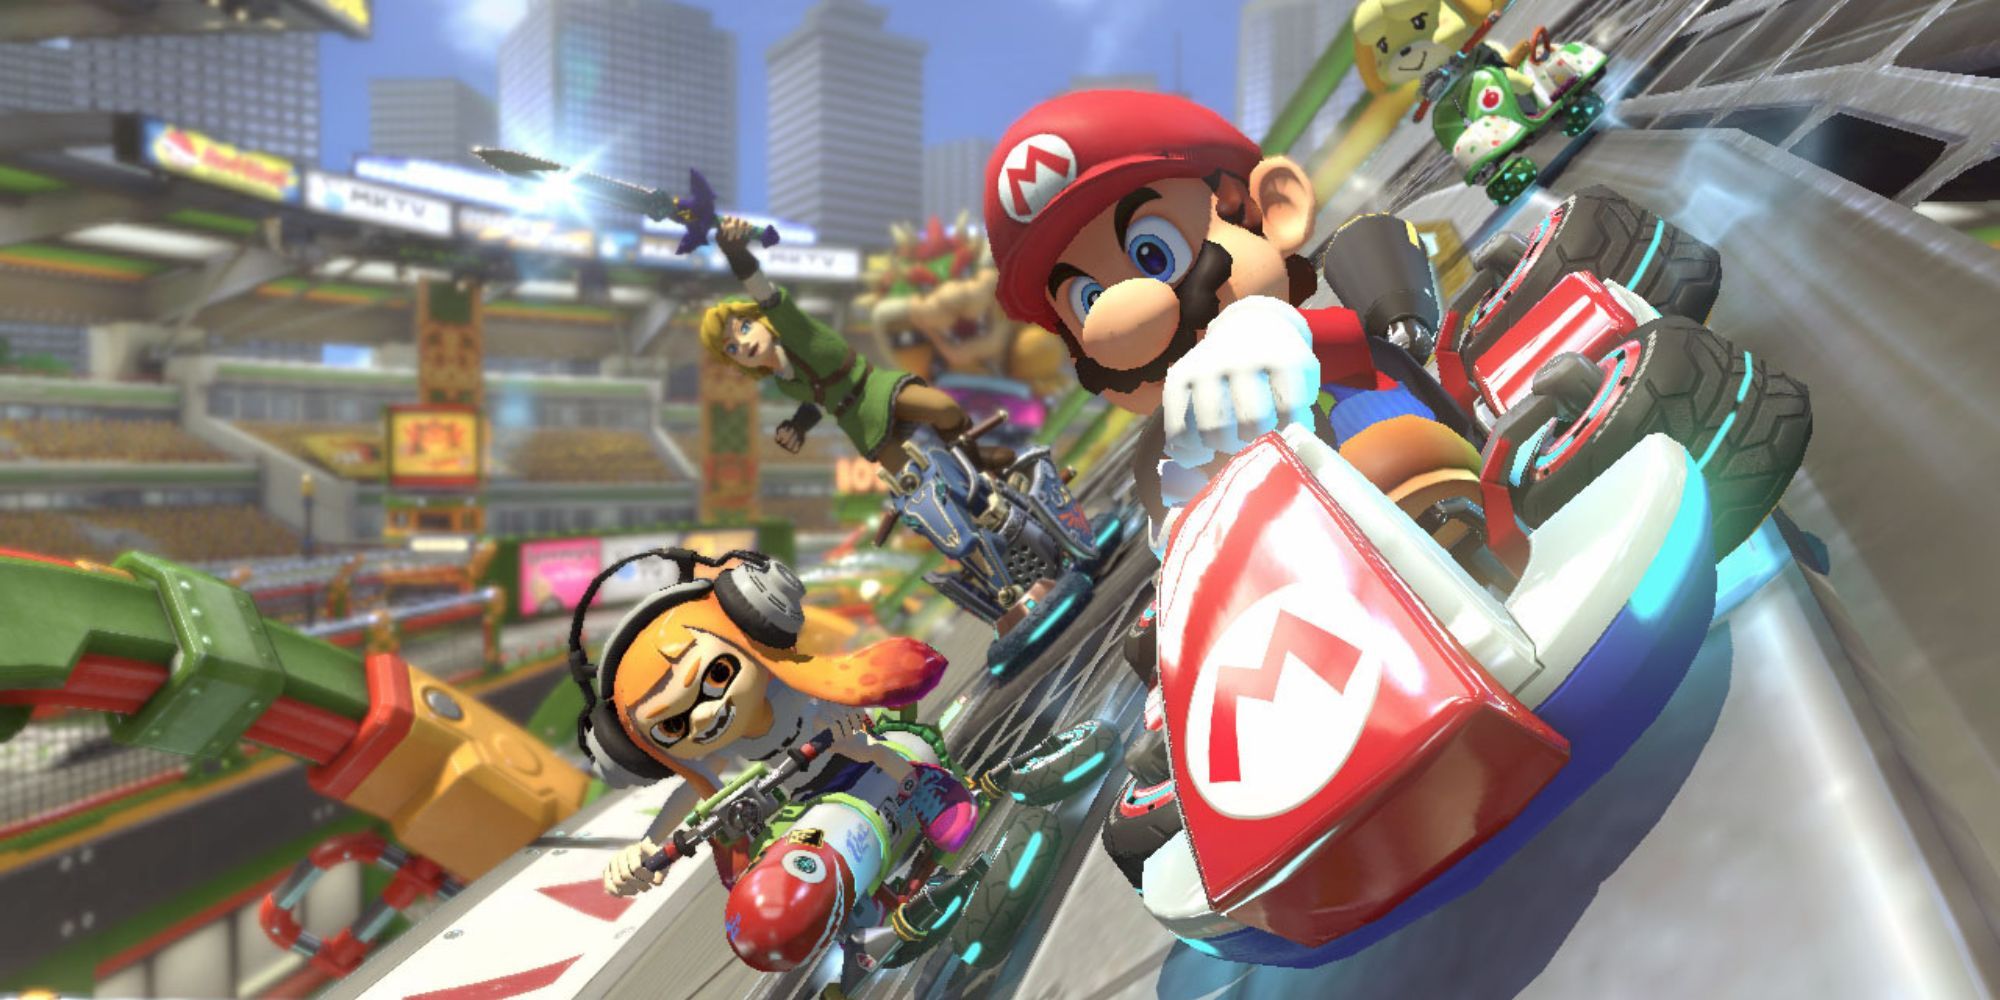 Mario racing other Nintendo characters in Mario Kart 8